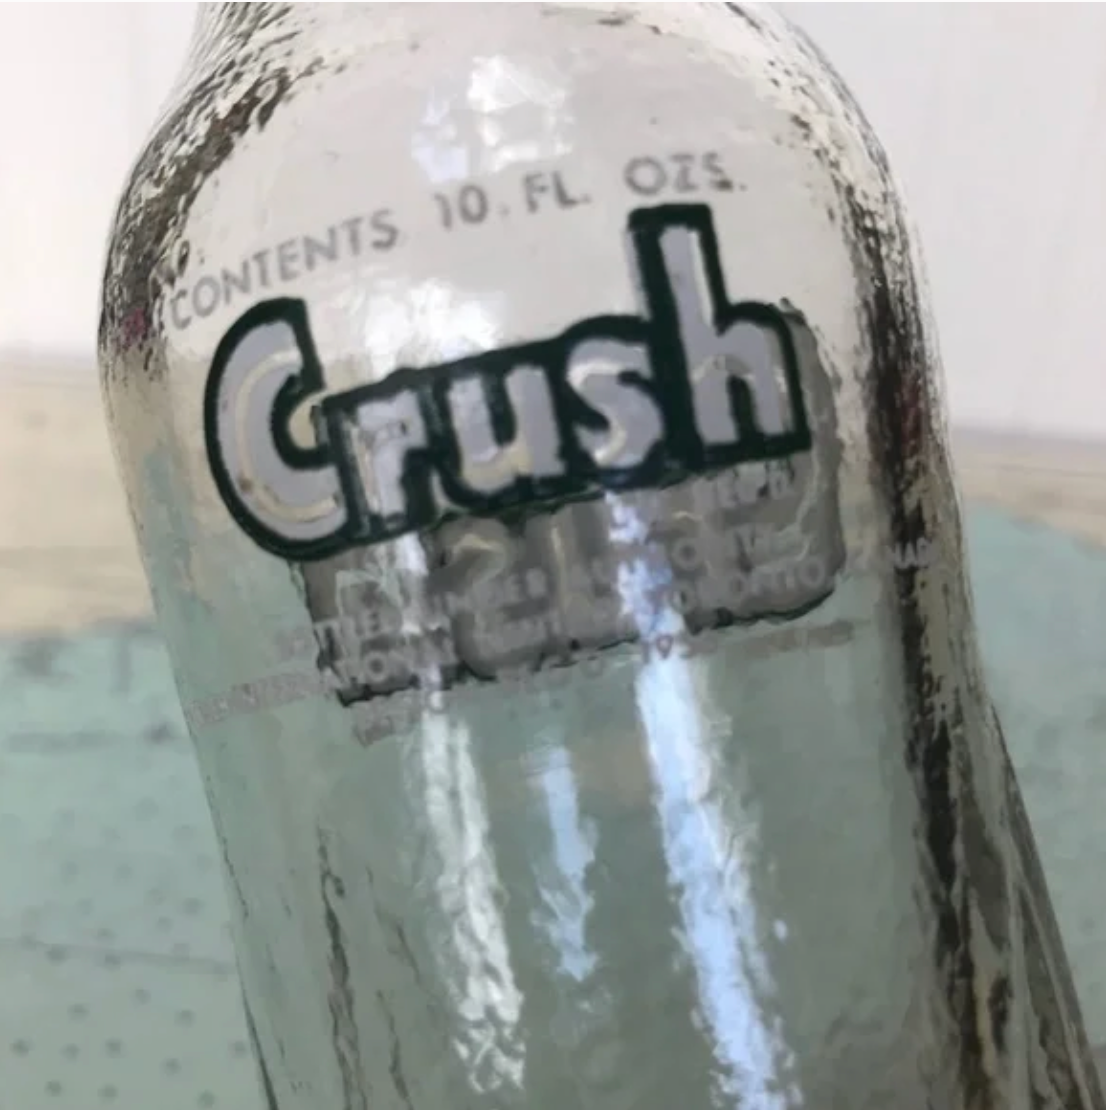 Vintage Orange Crush Glass Bottle